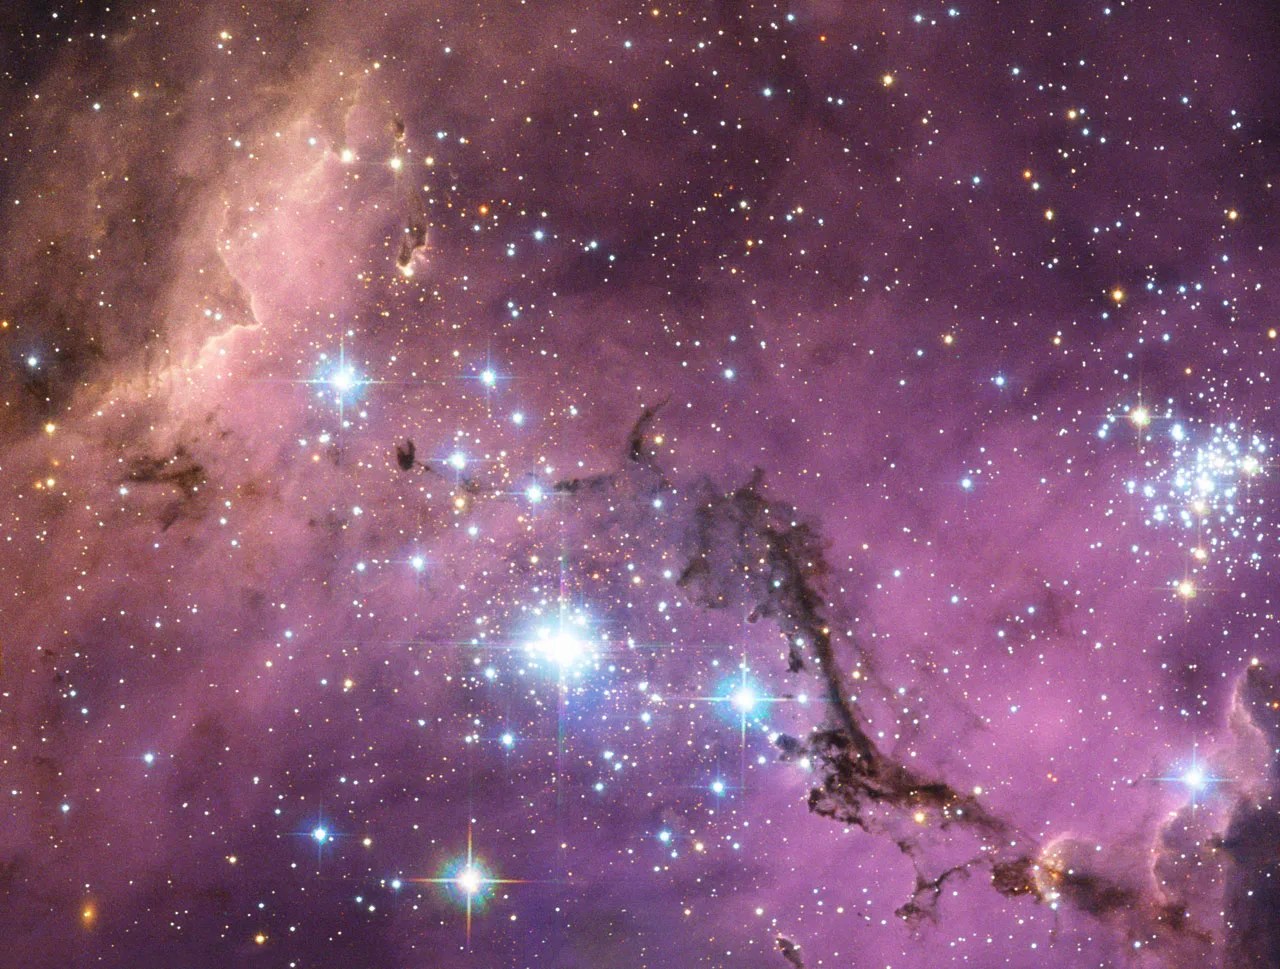 Hubble image of Large Magellanic Cloud portion